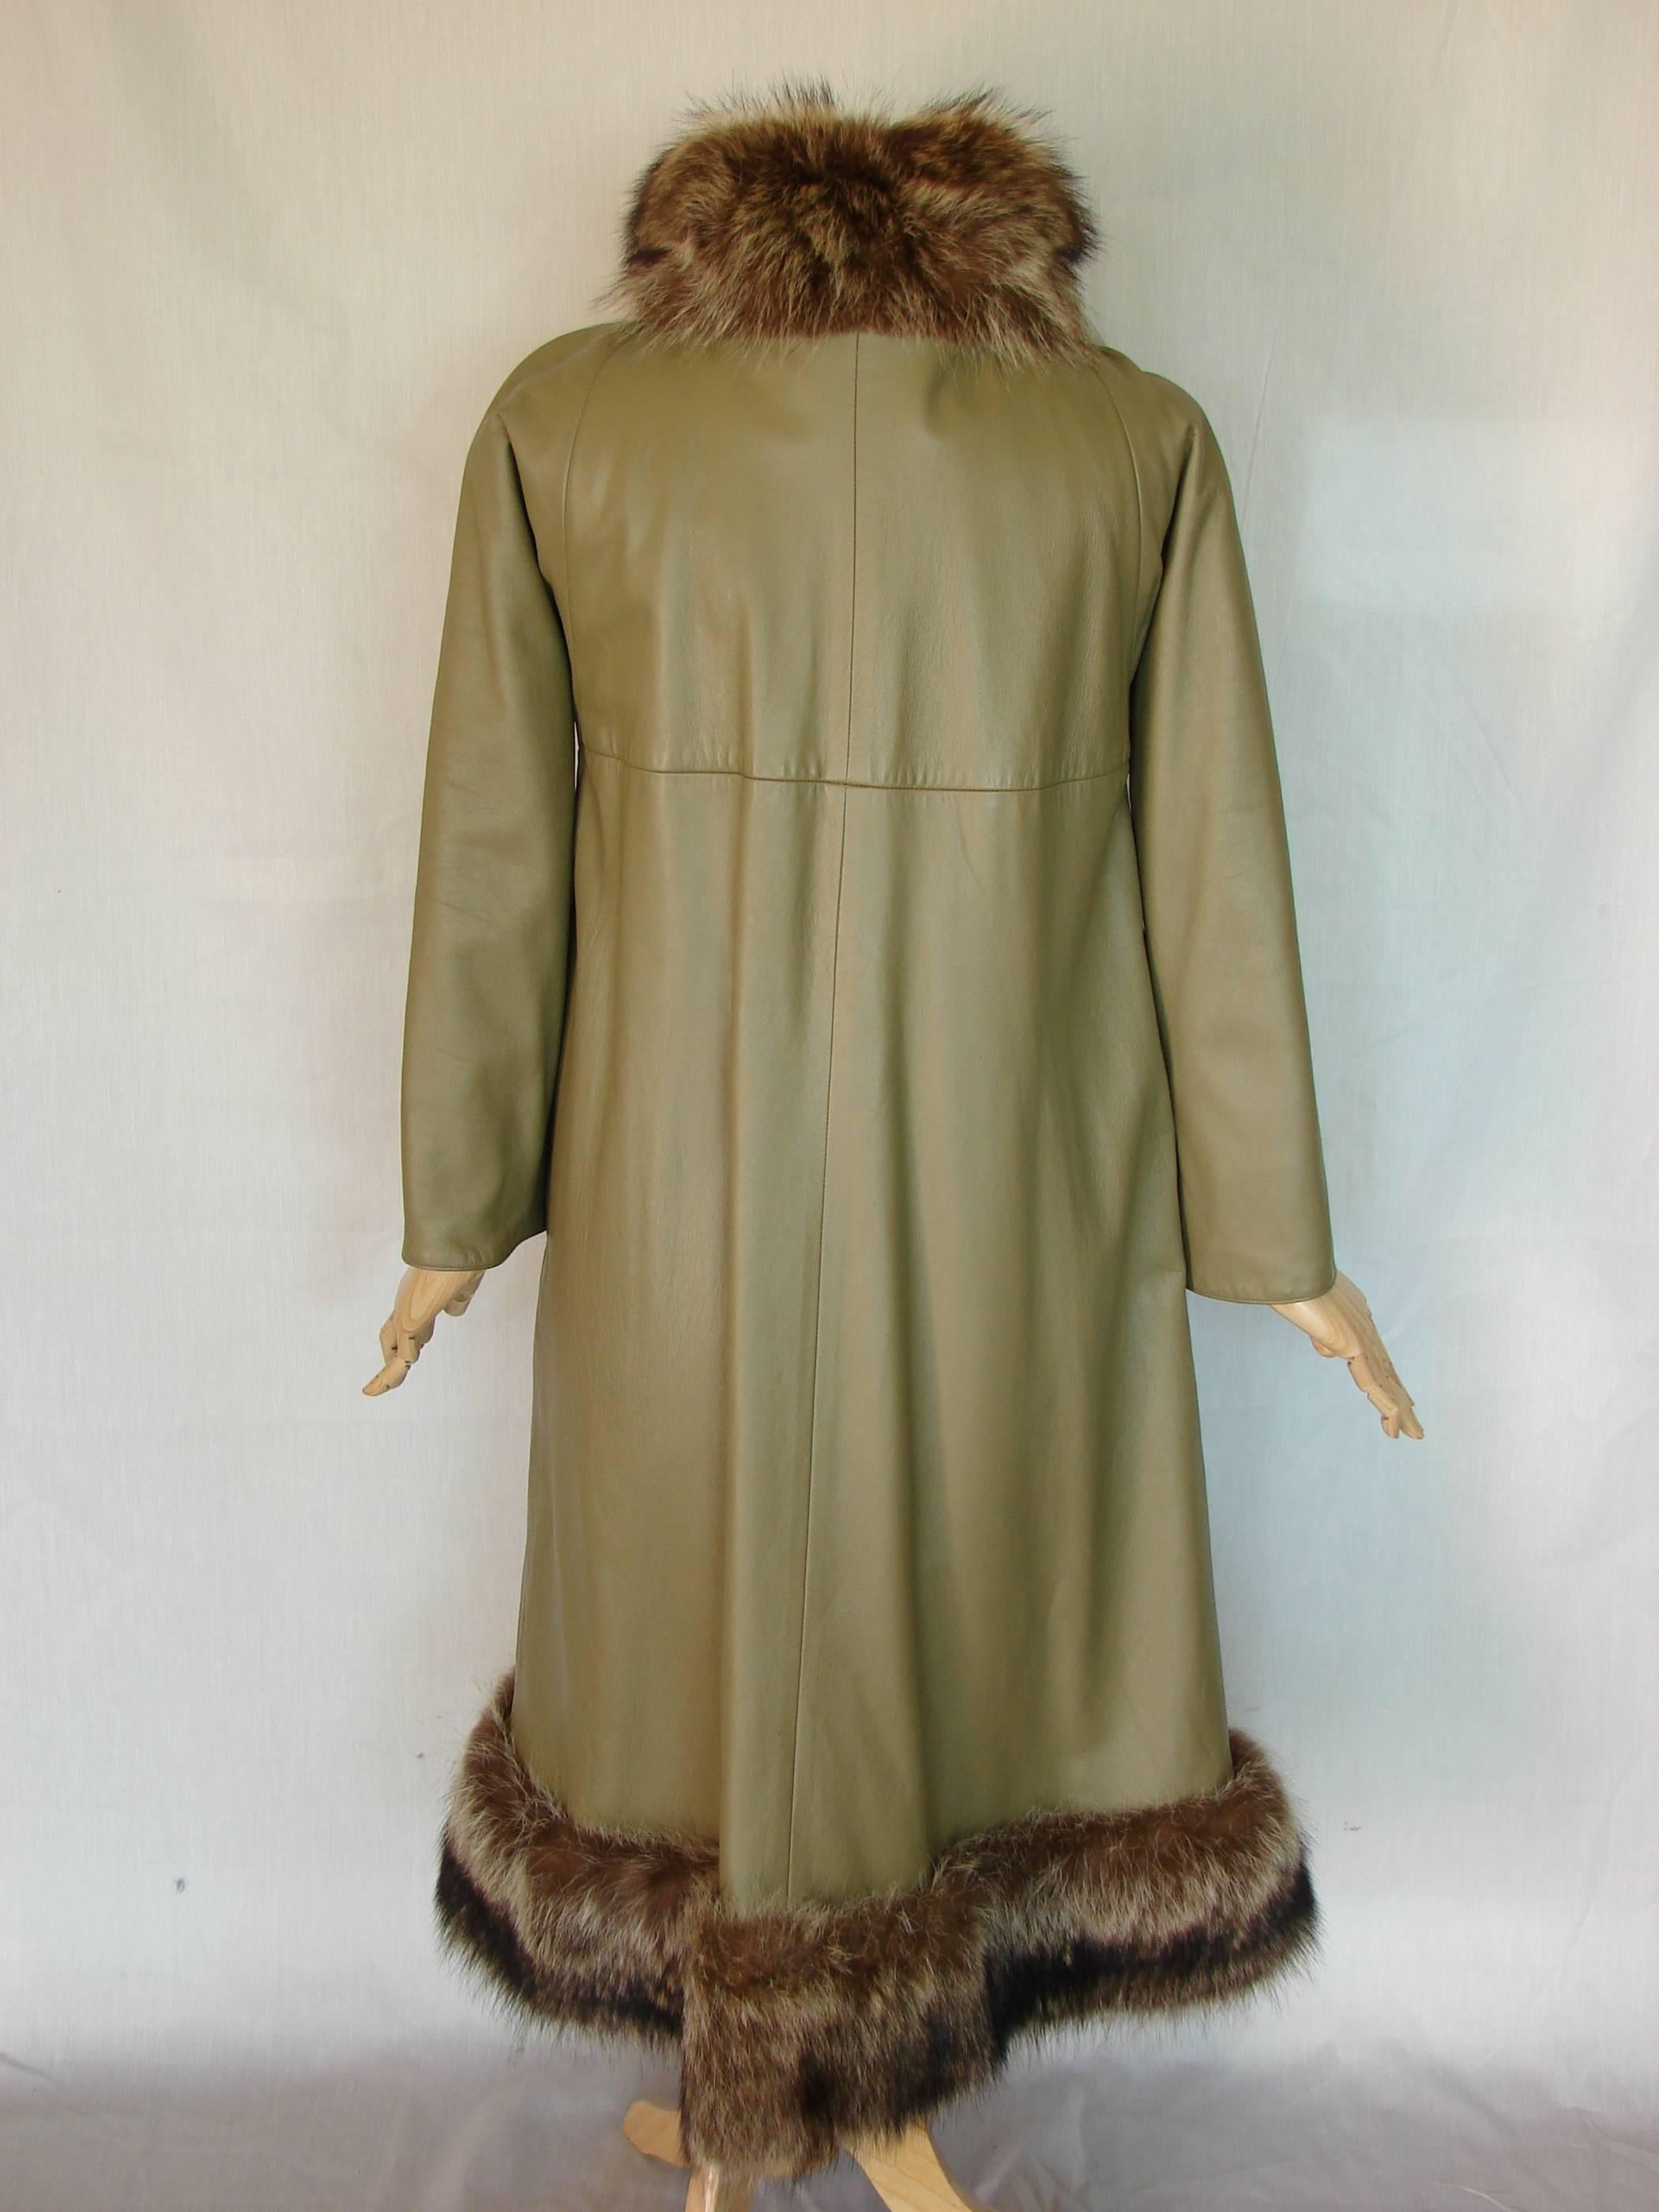 Bonnie Cashin for Sills Leather Swing Coat with Raccoon Fur Trim 1960s Sz M 3